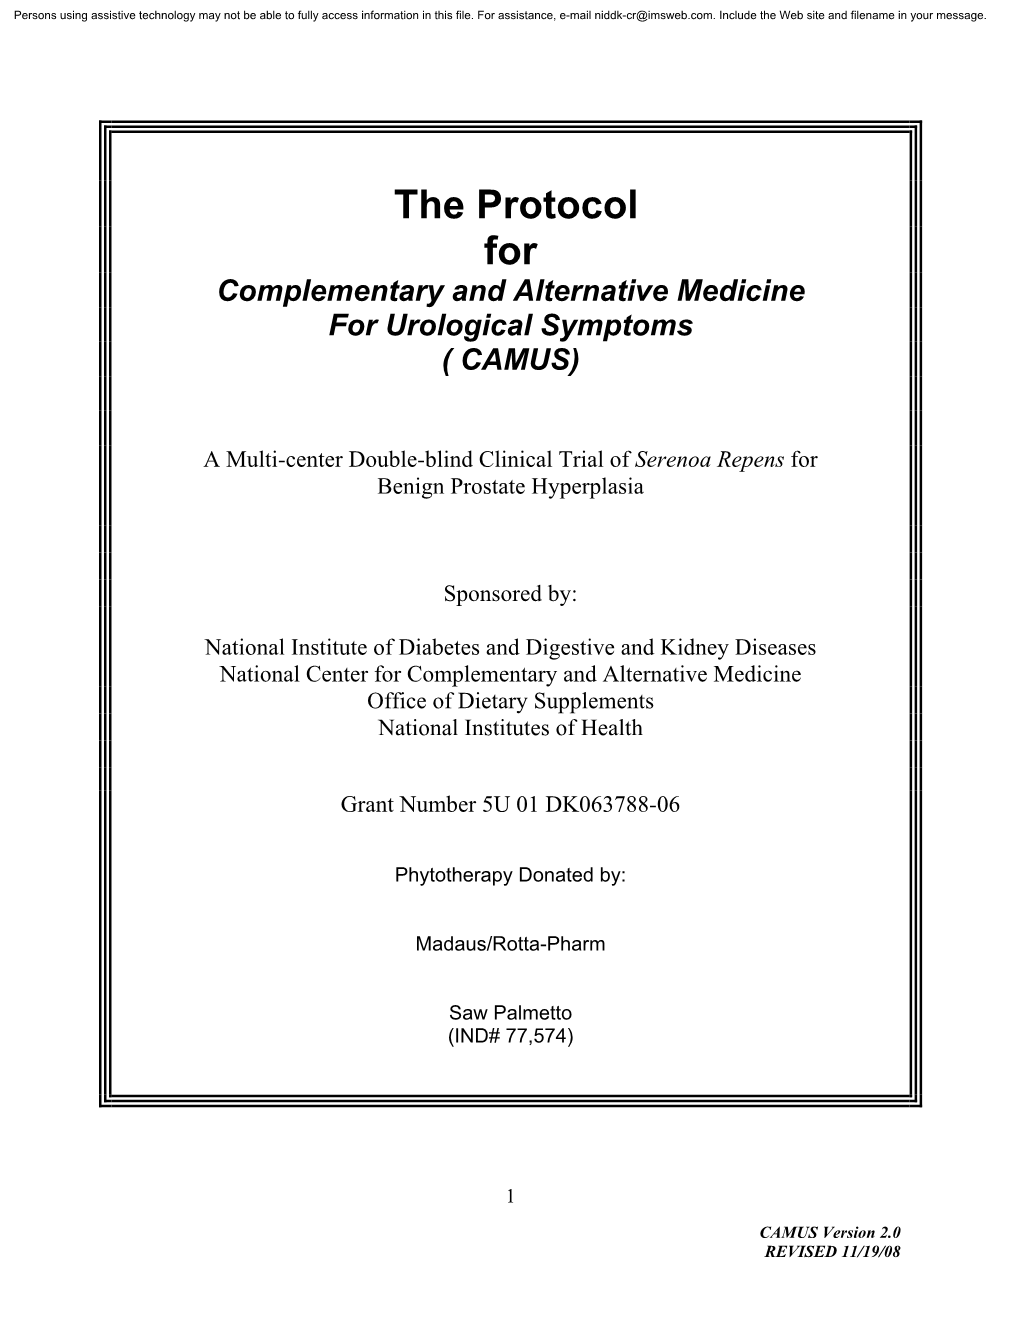 CAMUS Protocol